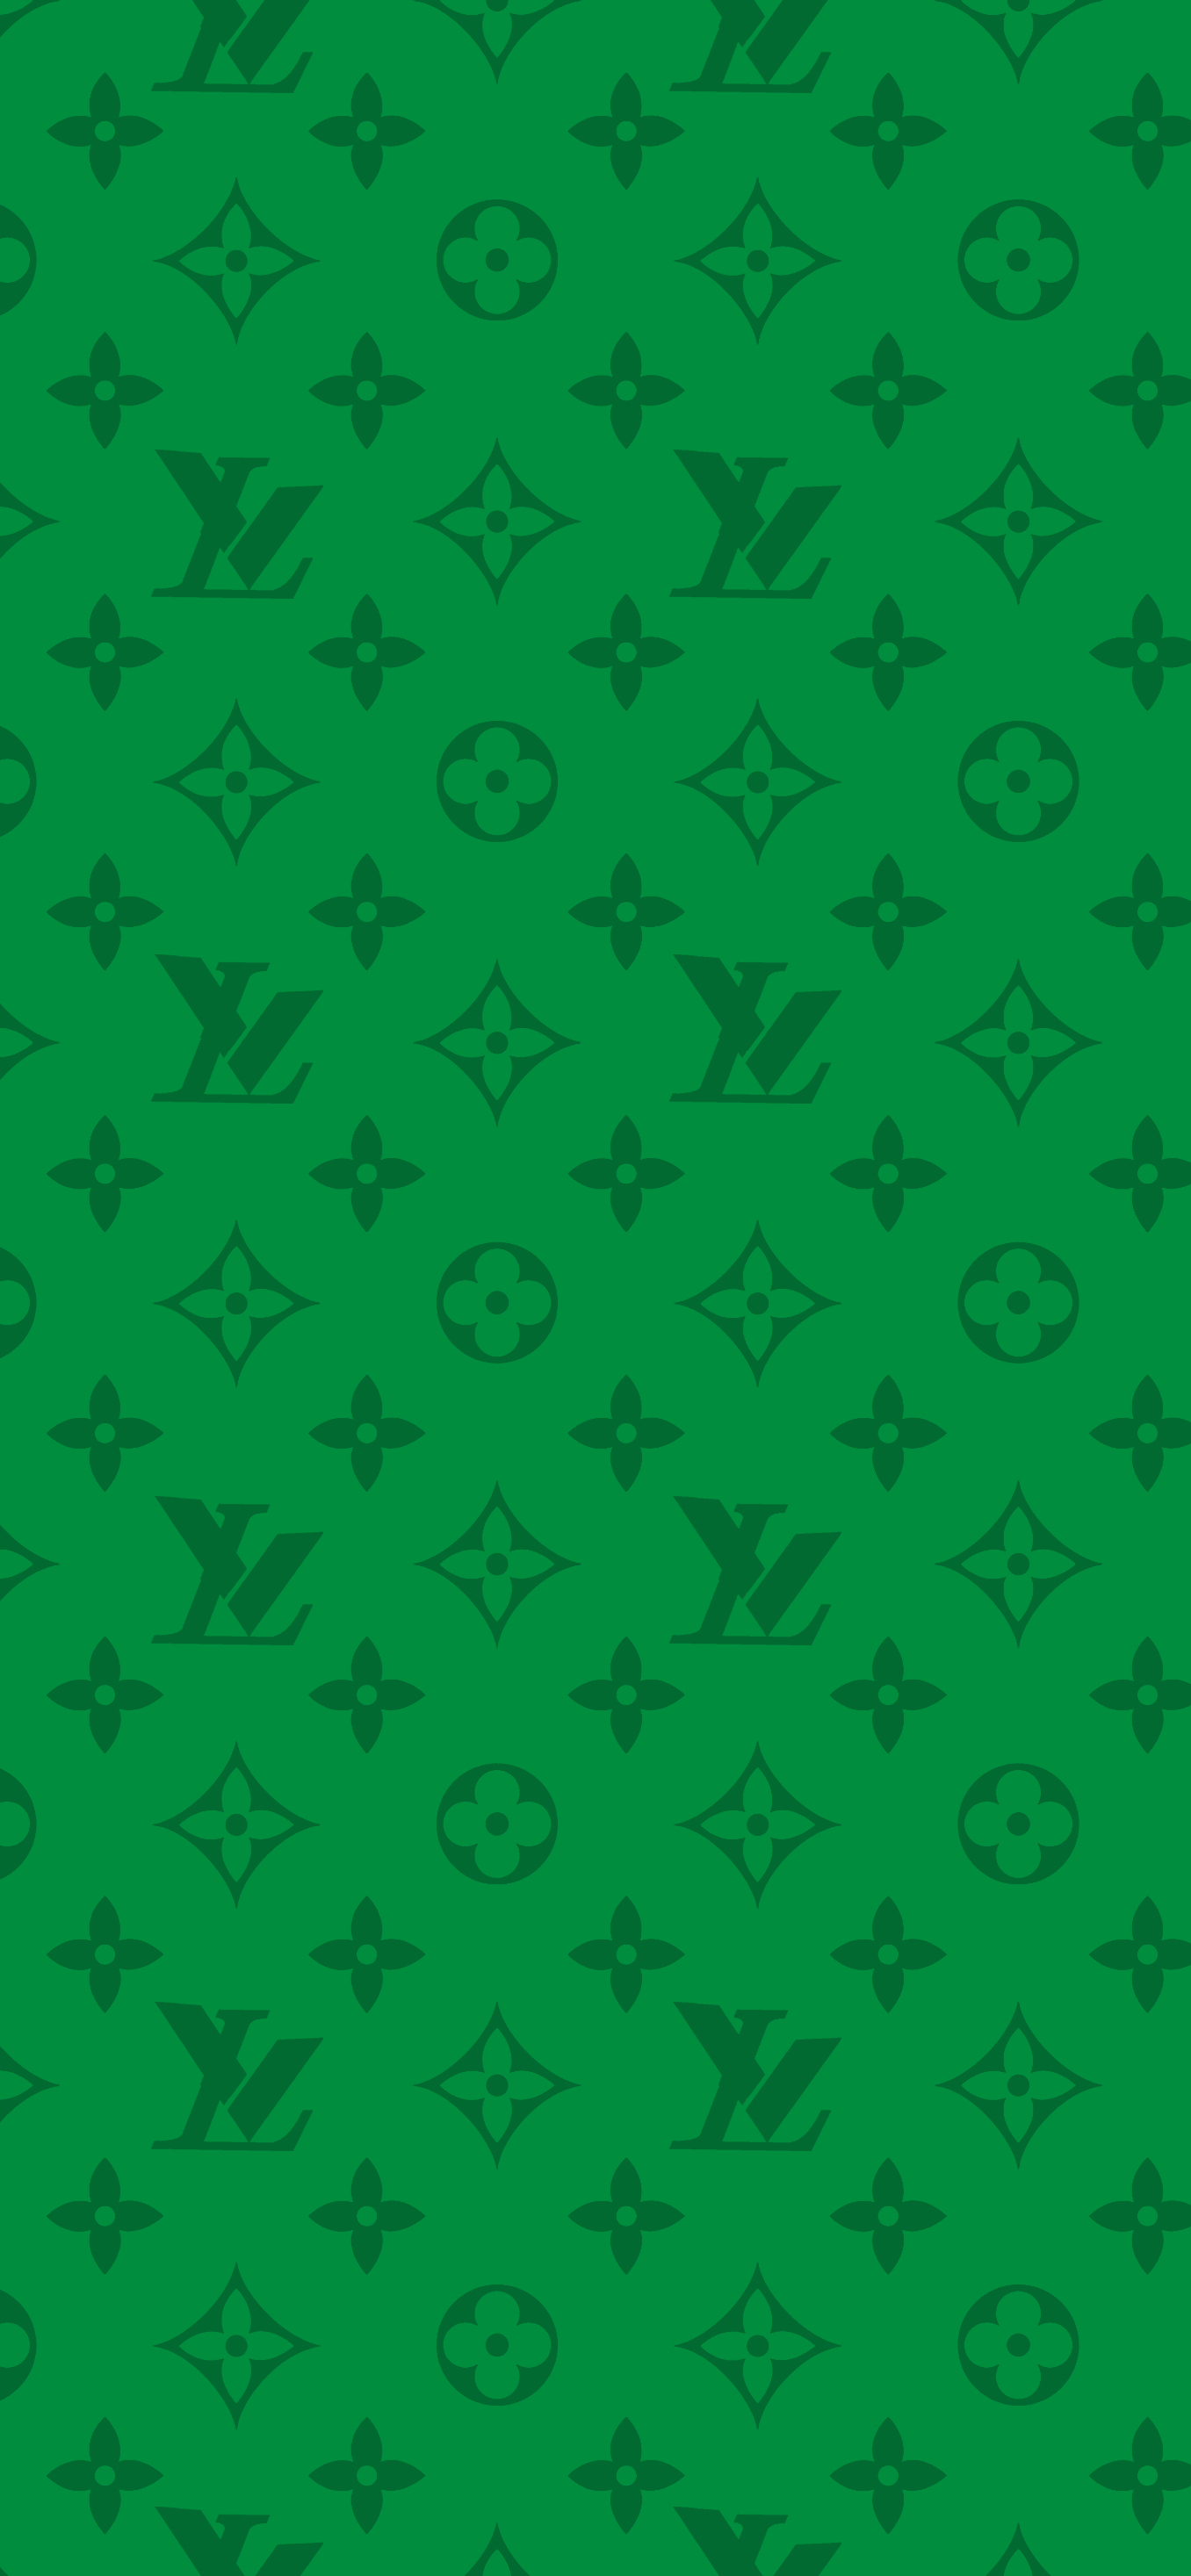 Ky⁷ 黄色 🥢 on Twitter: 🌍BTS x Louis Vuitton Wallpaper 🌏 A reimagining of  the LV heritage print with some subtle bangtan #BTSxLouisVuitton #방탄소년단  @BTS_twt #btslockscreen  / Twitter